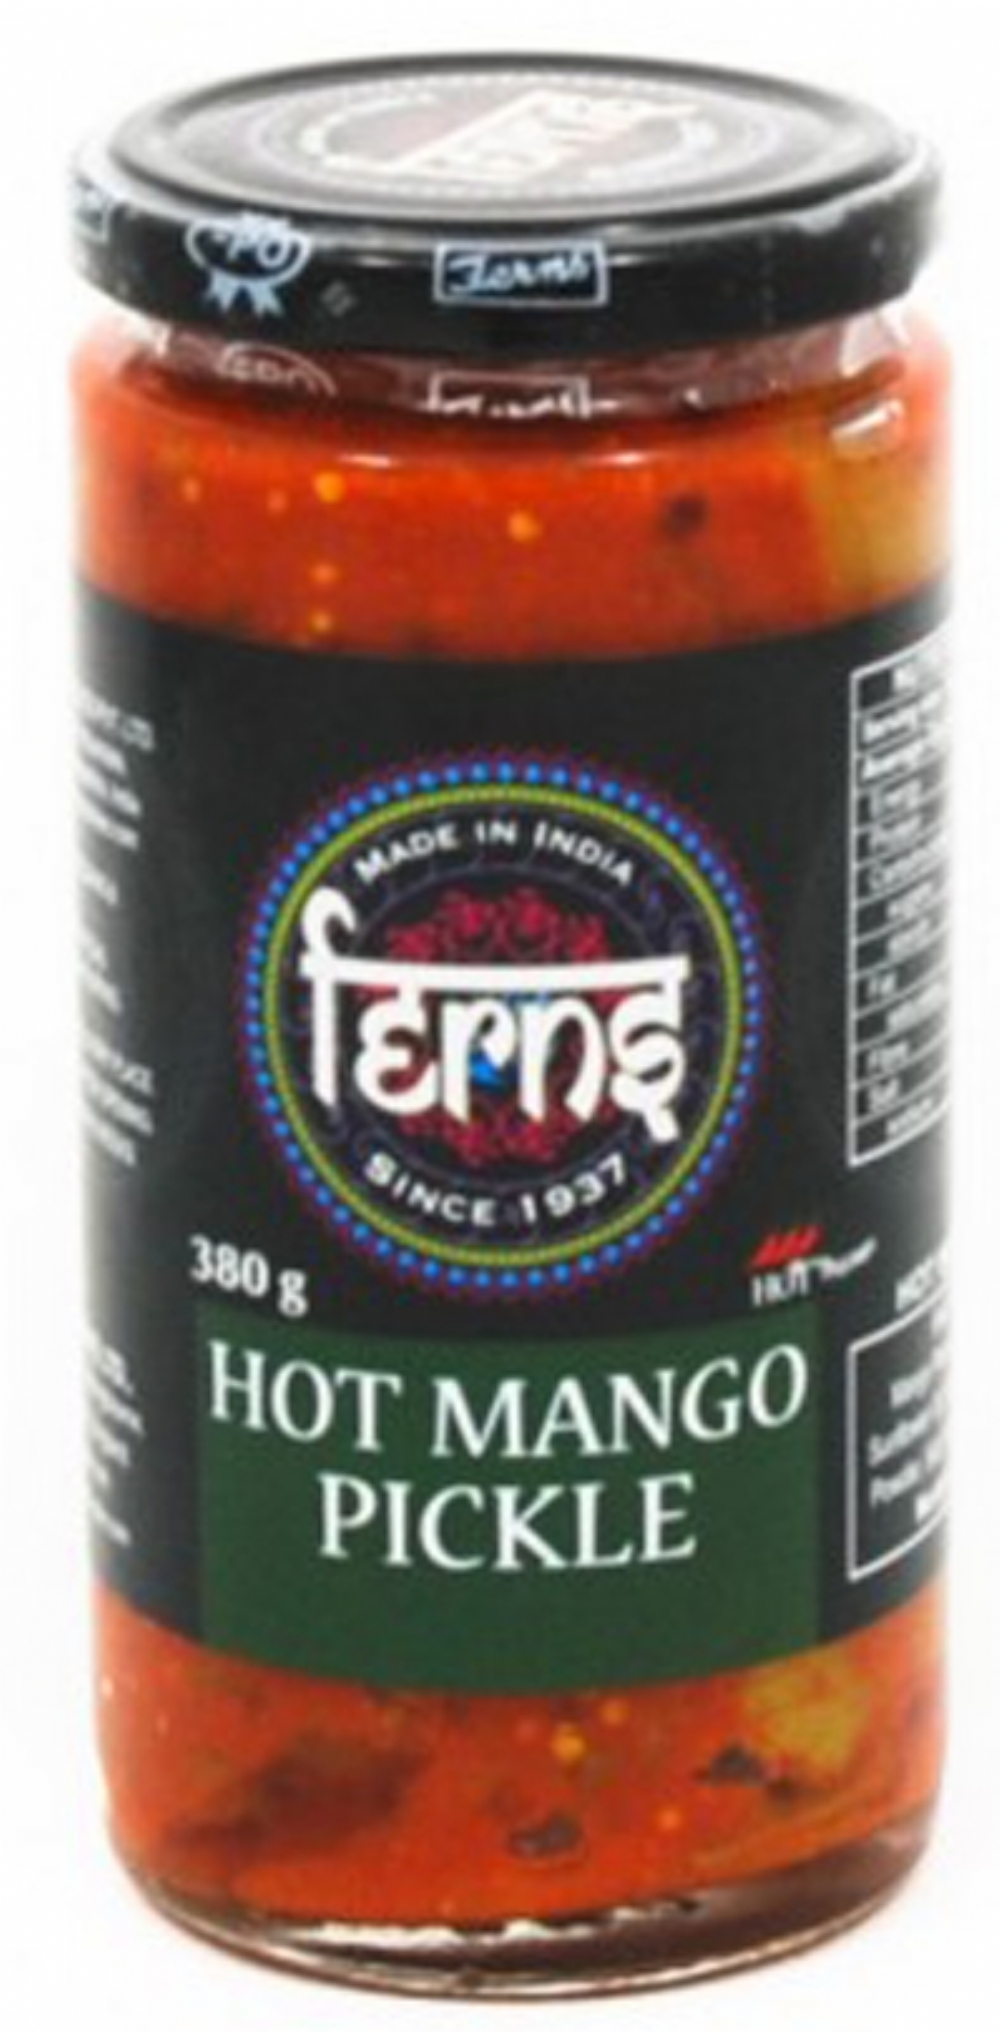 FERN'S Hot Mango Pickle 380g